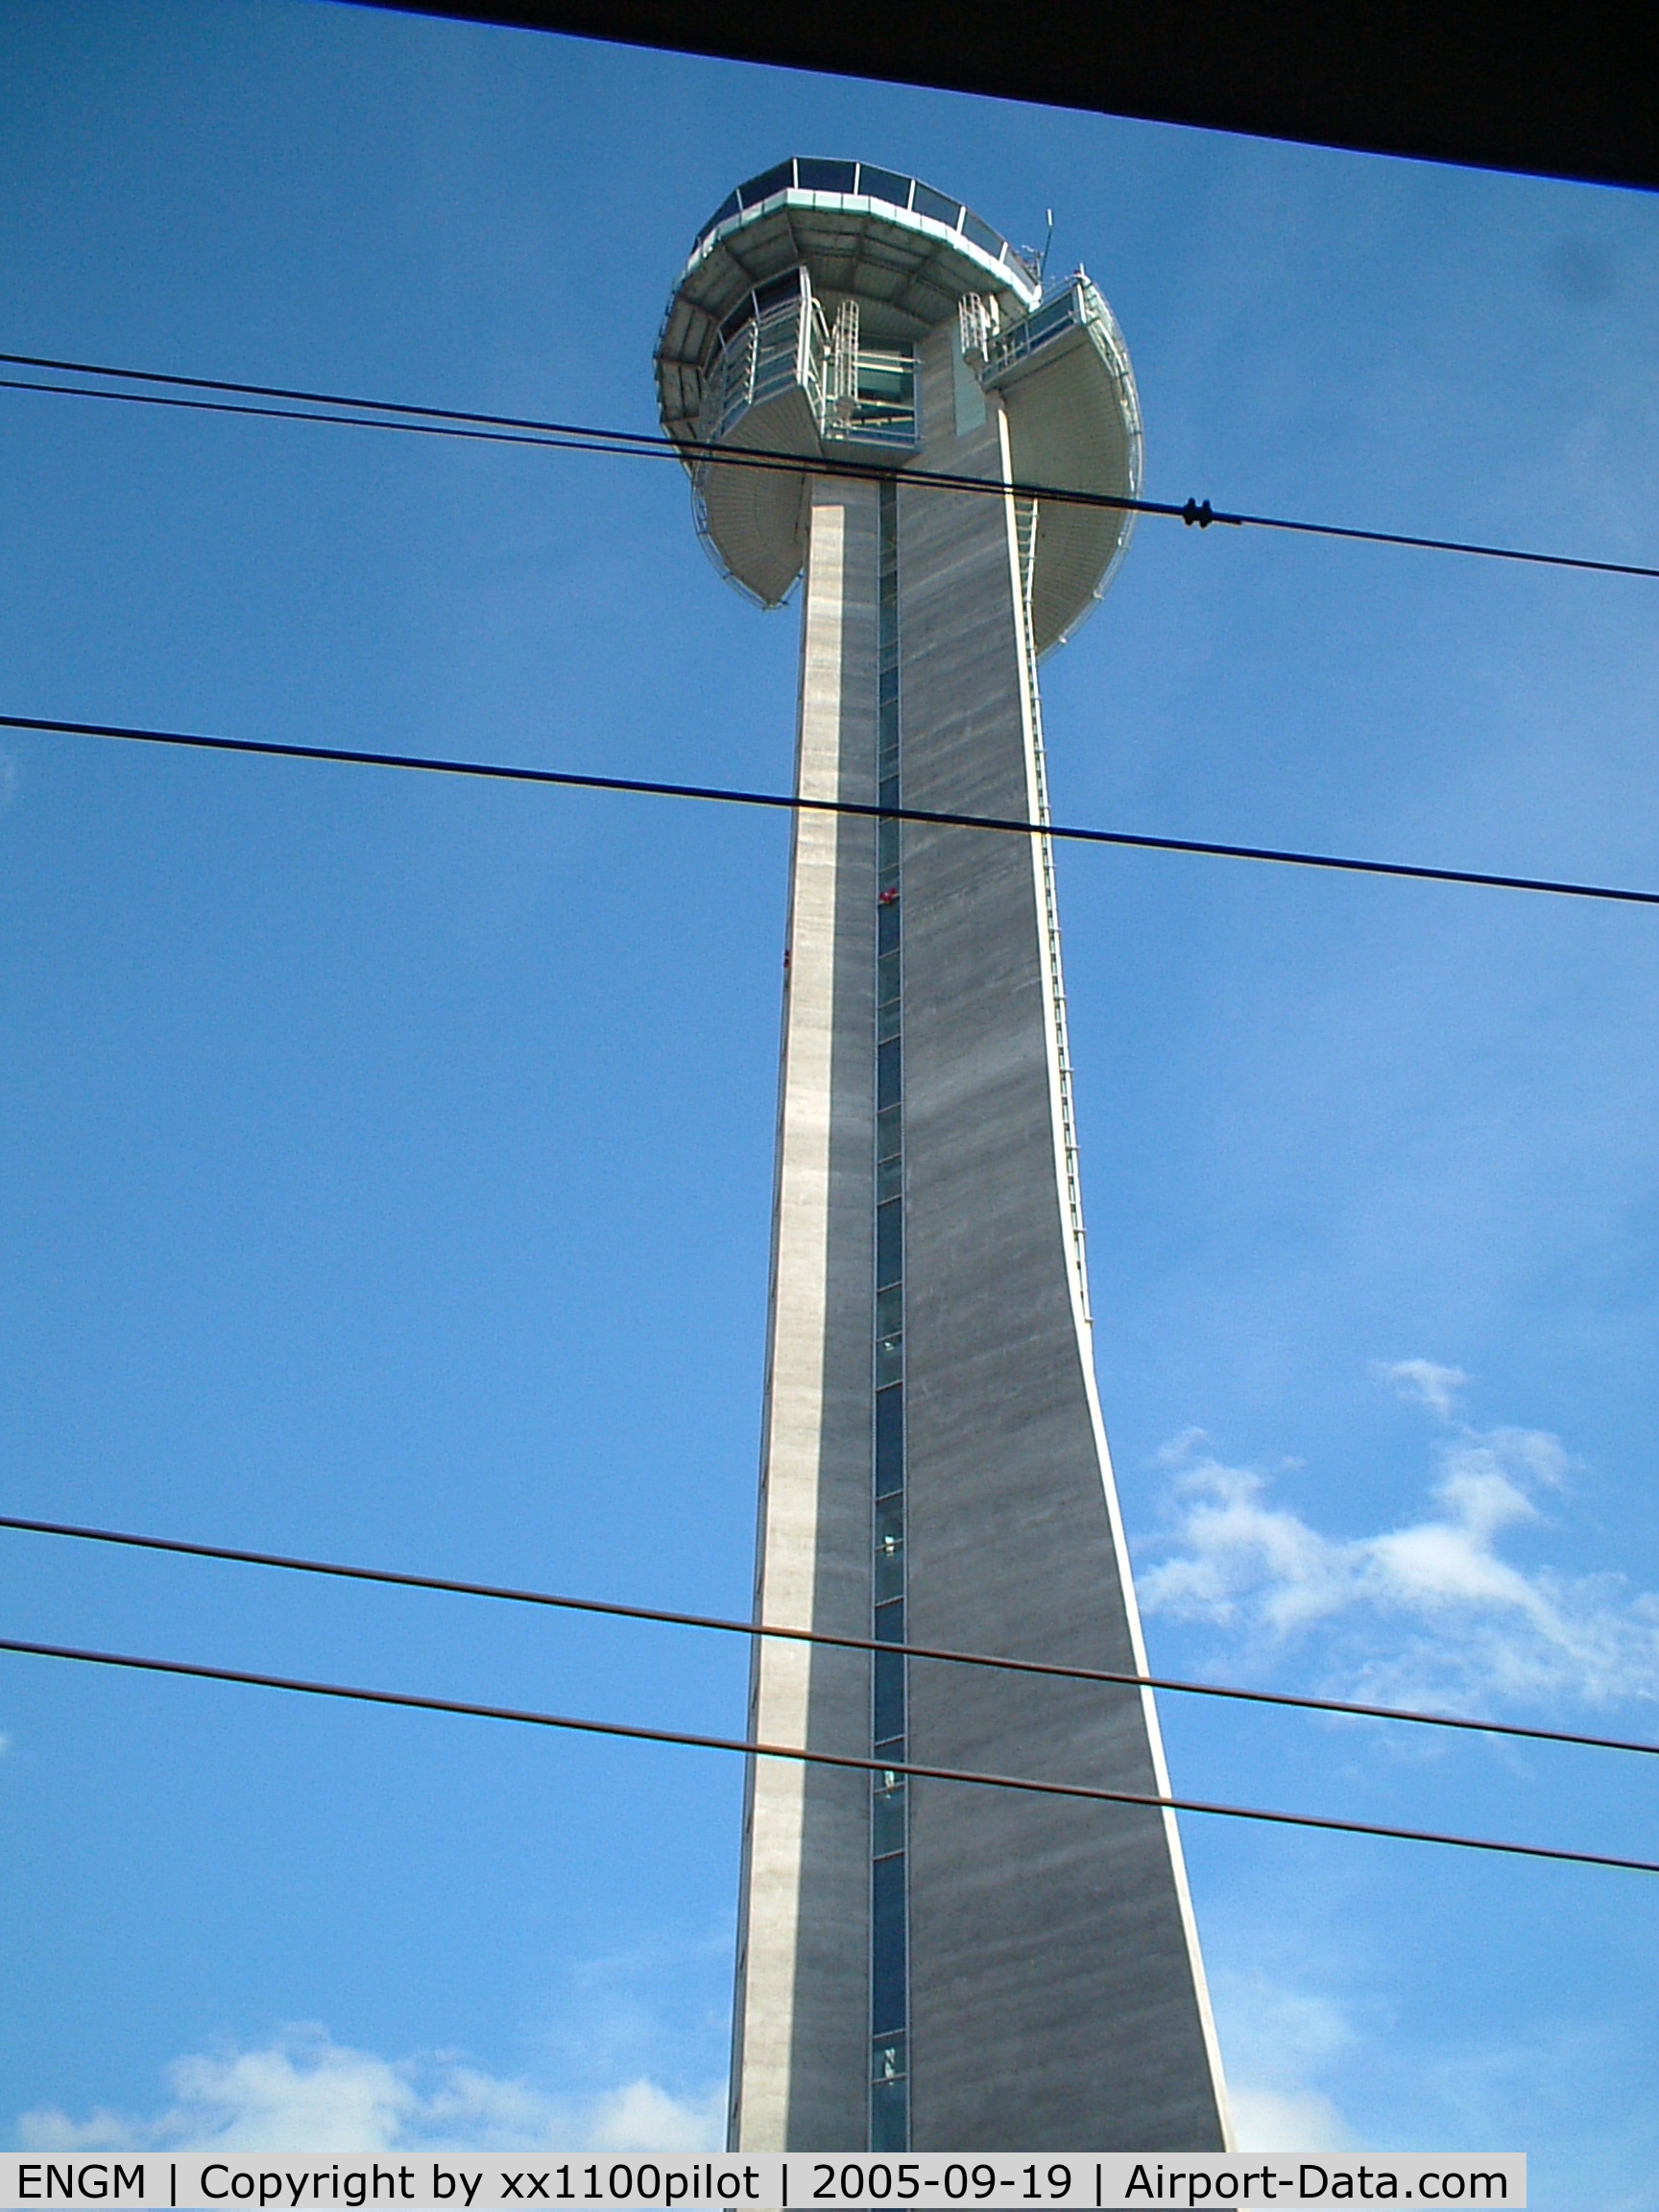 Oslo Airport, Gardermoen, Gardermoen (near Oslo), Akershus Norway (ENGM) - Tower 90 m tall.